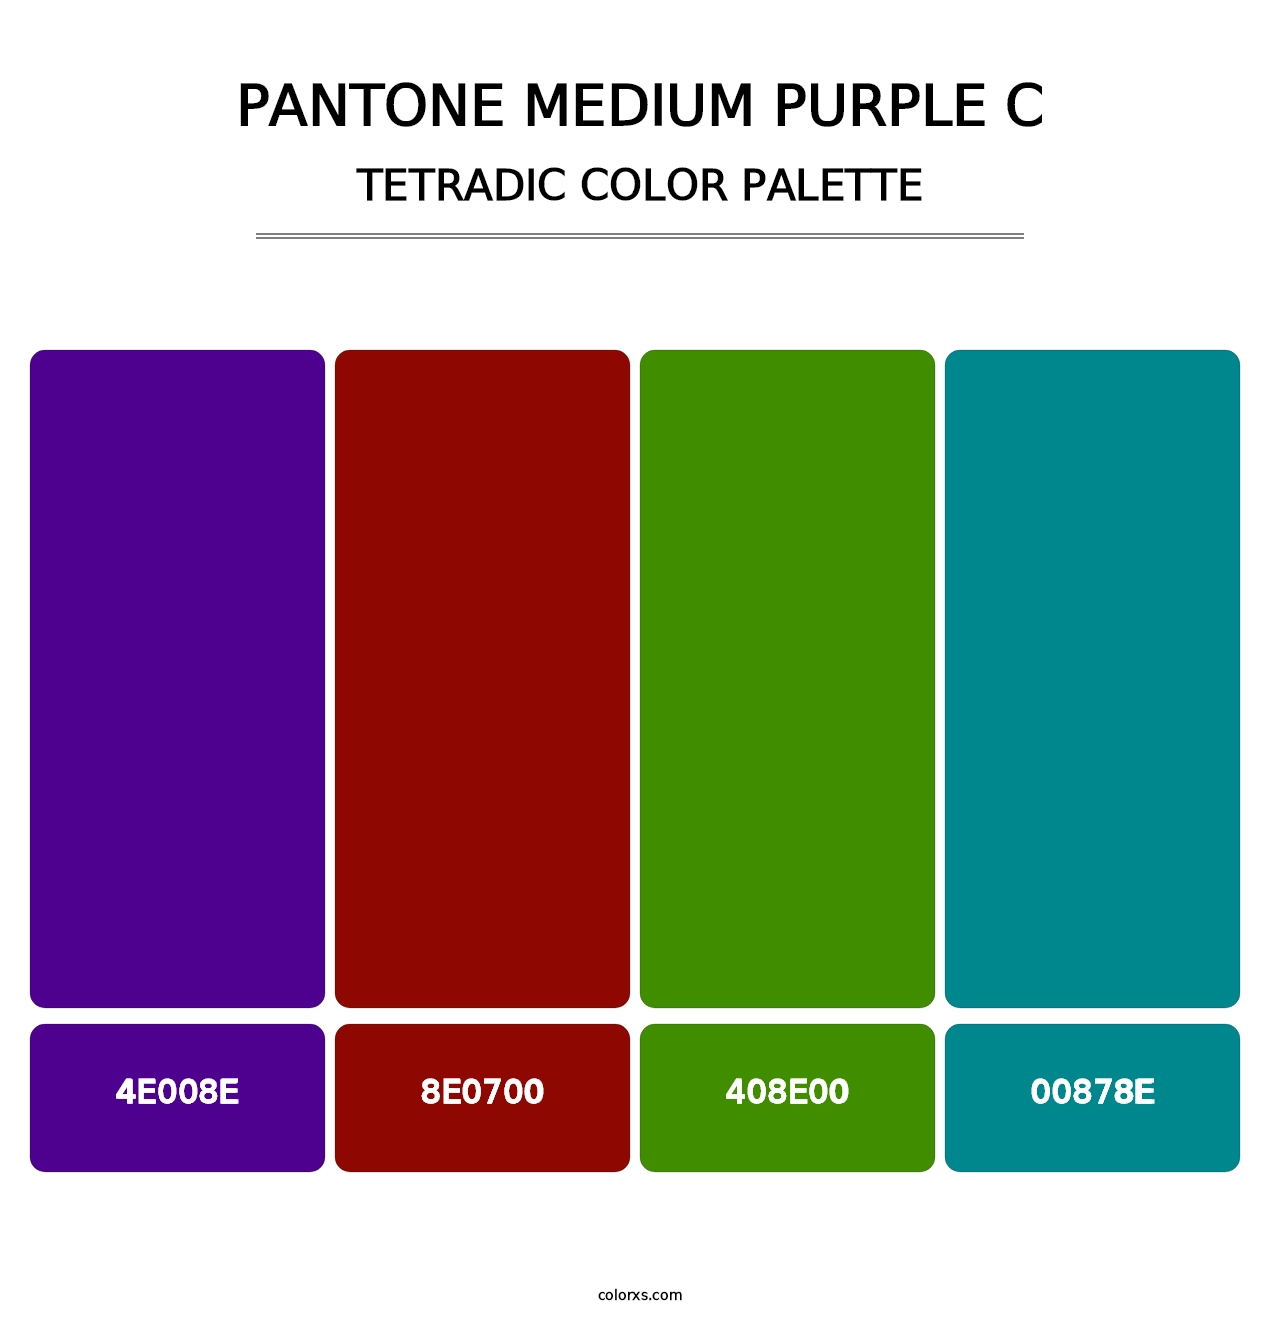 PANTONE Medium Purple C - Tetradic Color Palette